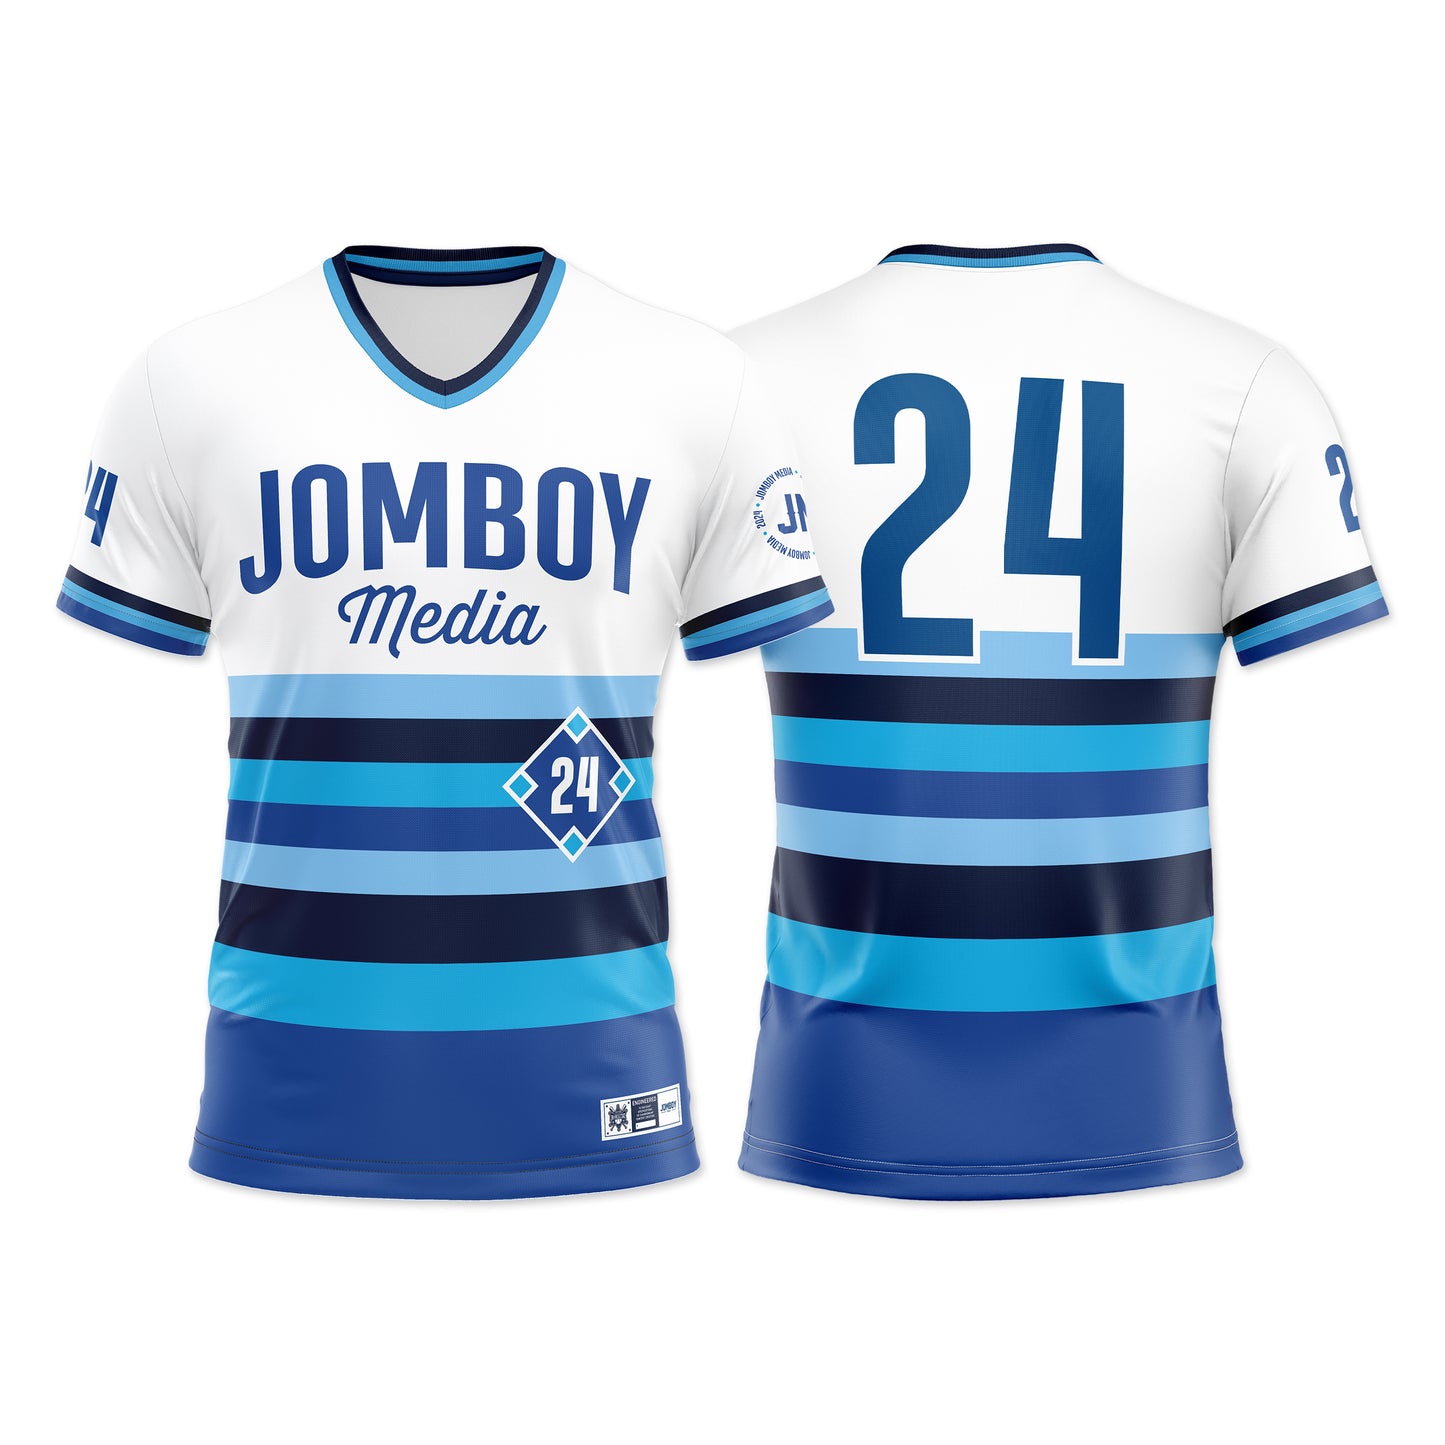 Jomboy Media 2024 Jersey